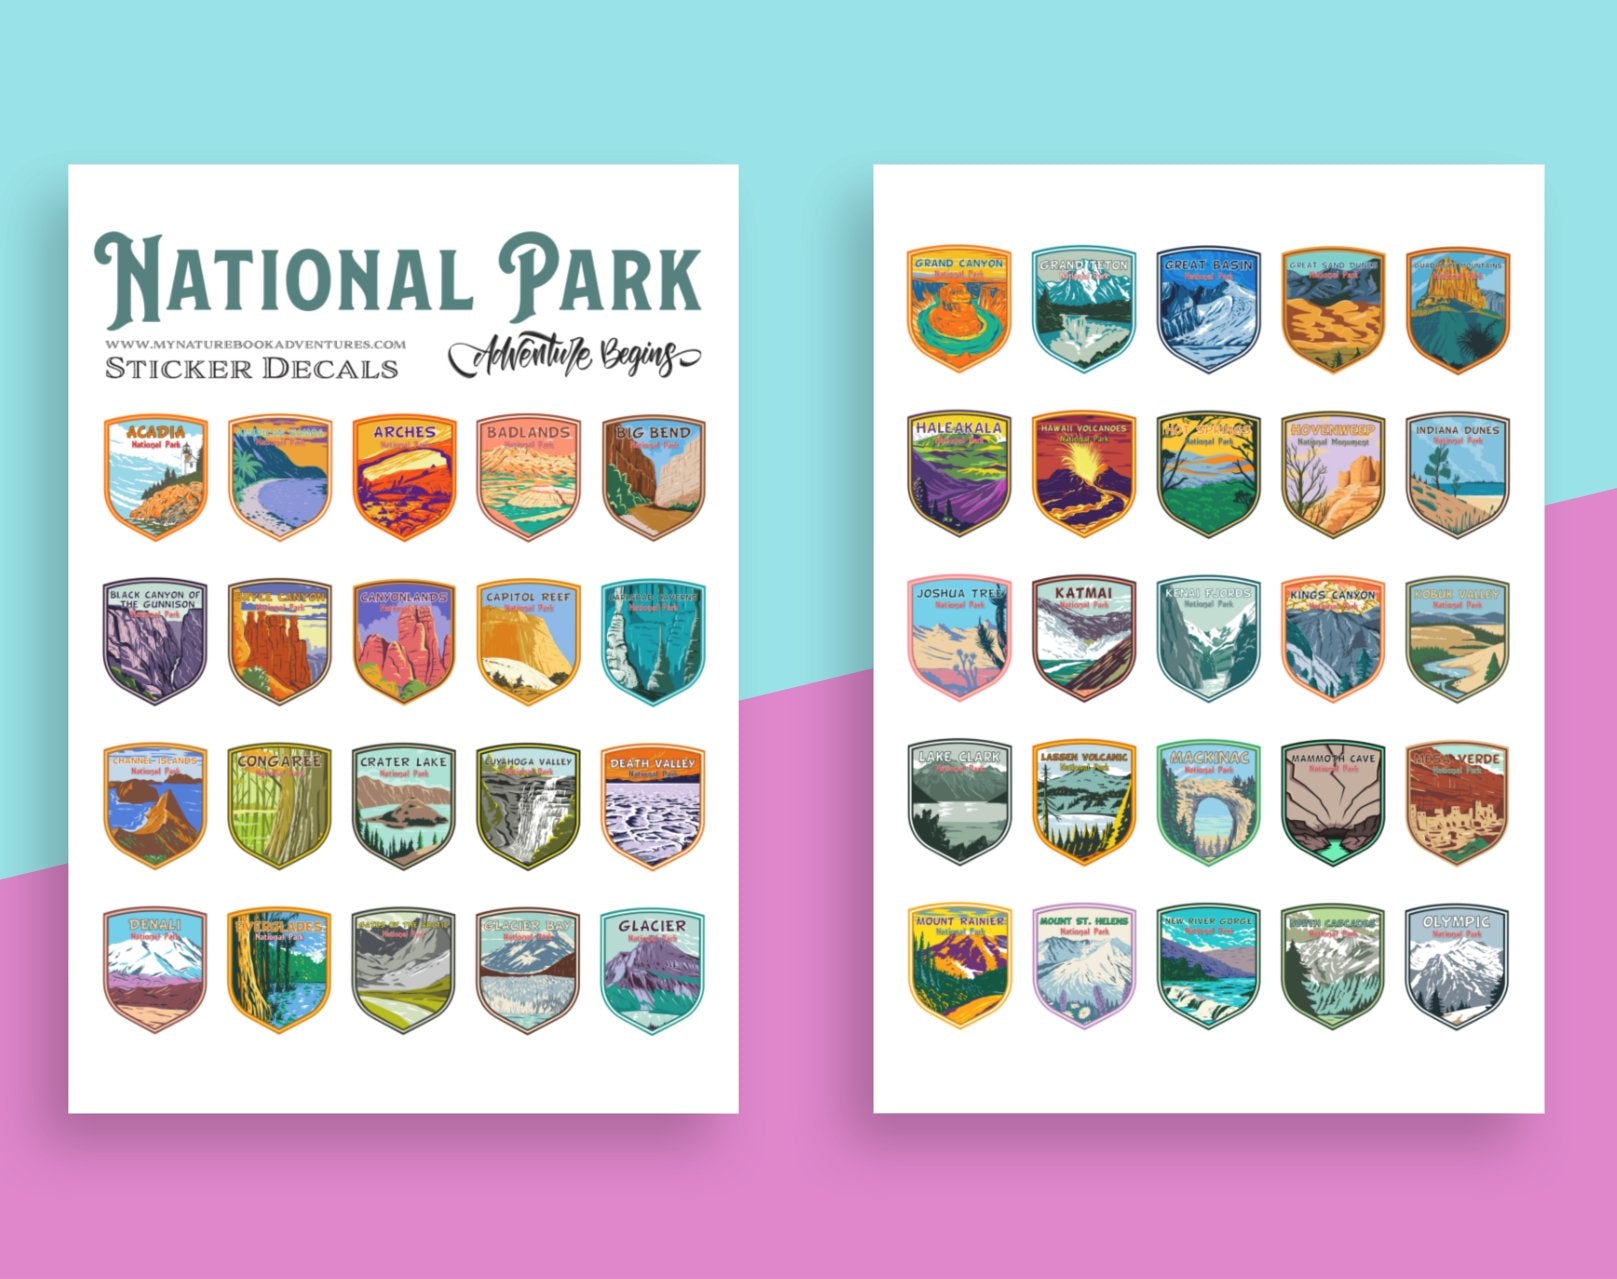 63 National Park Sticker Decals - My Nature Book Adventures